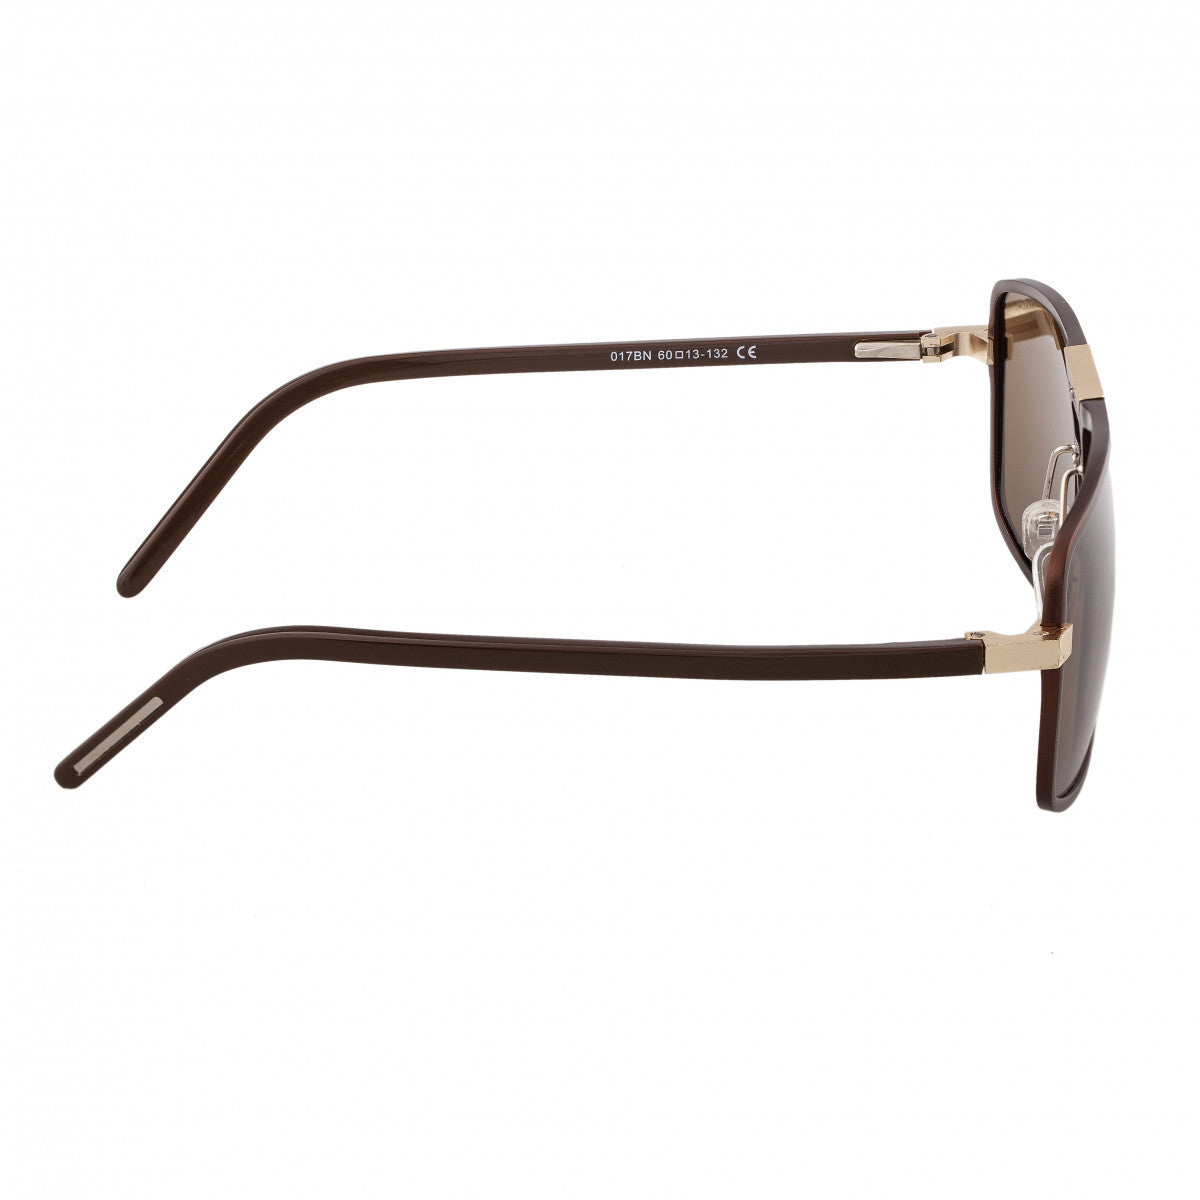 Breed Retrograde Aluminium Polarized Sunglasses - Brown/Brown - BSG017BN